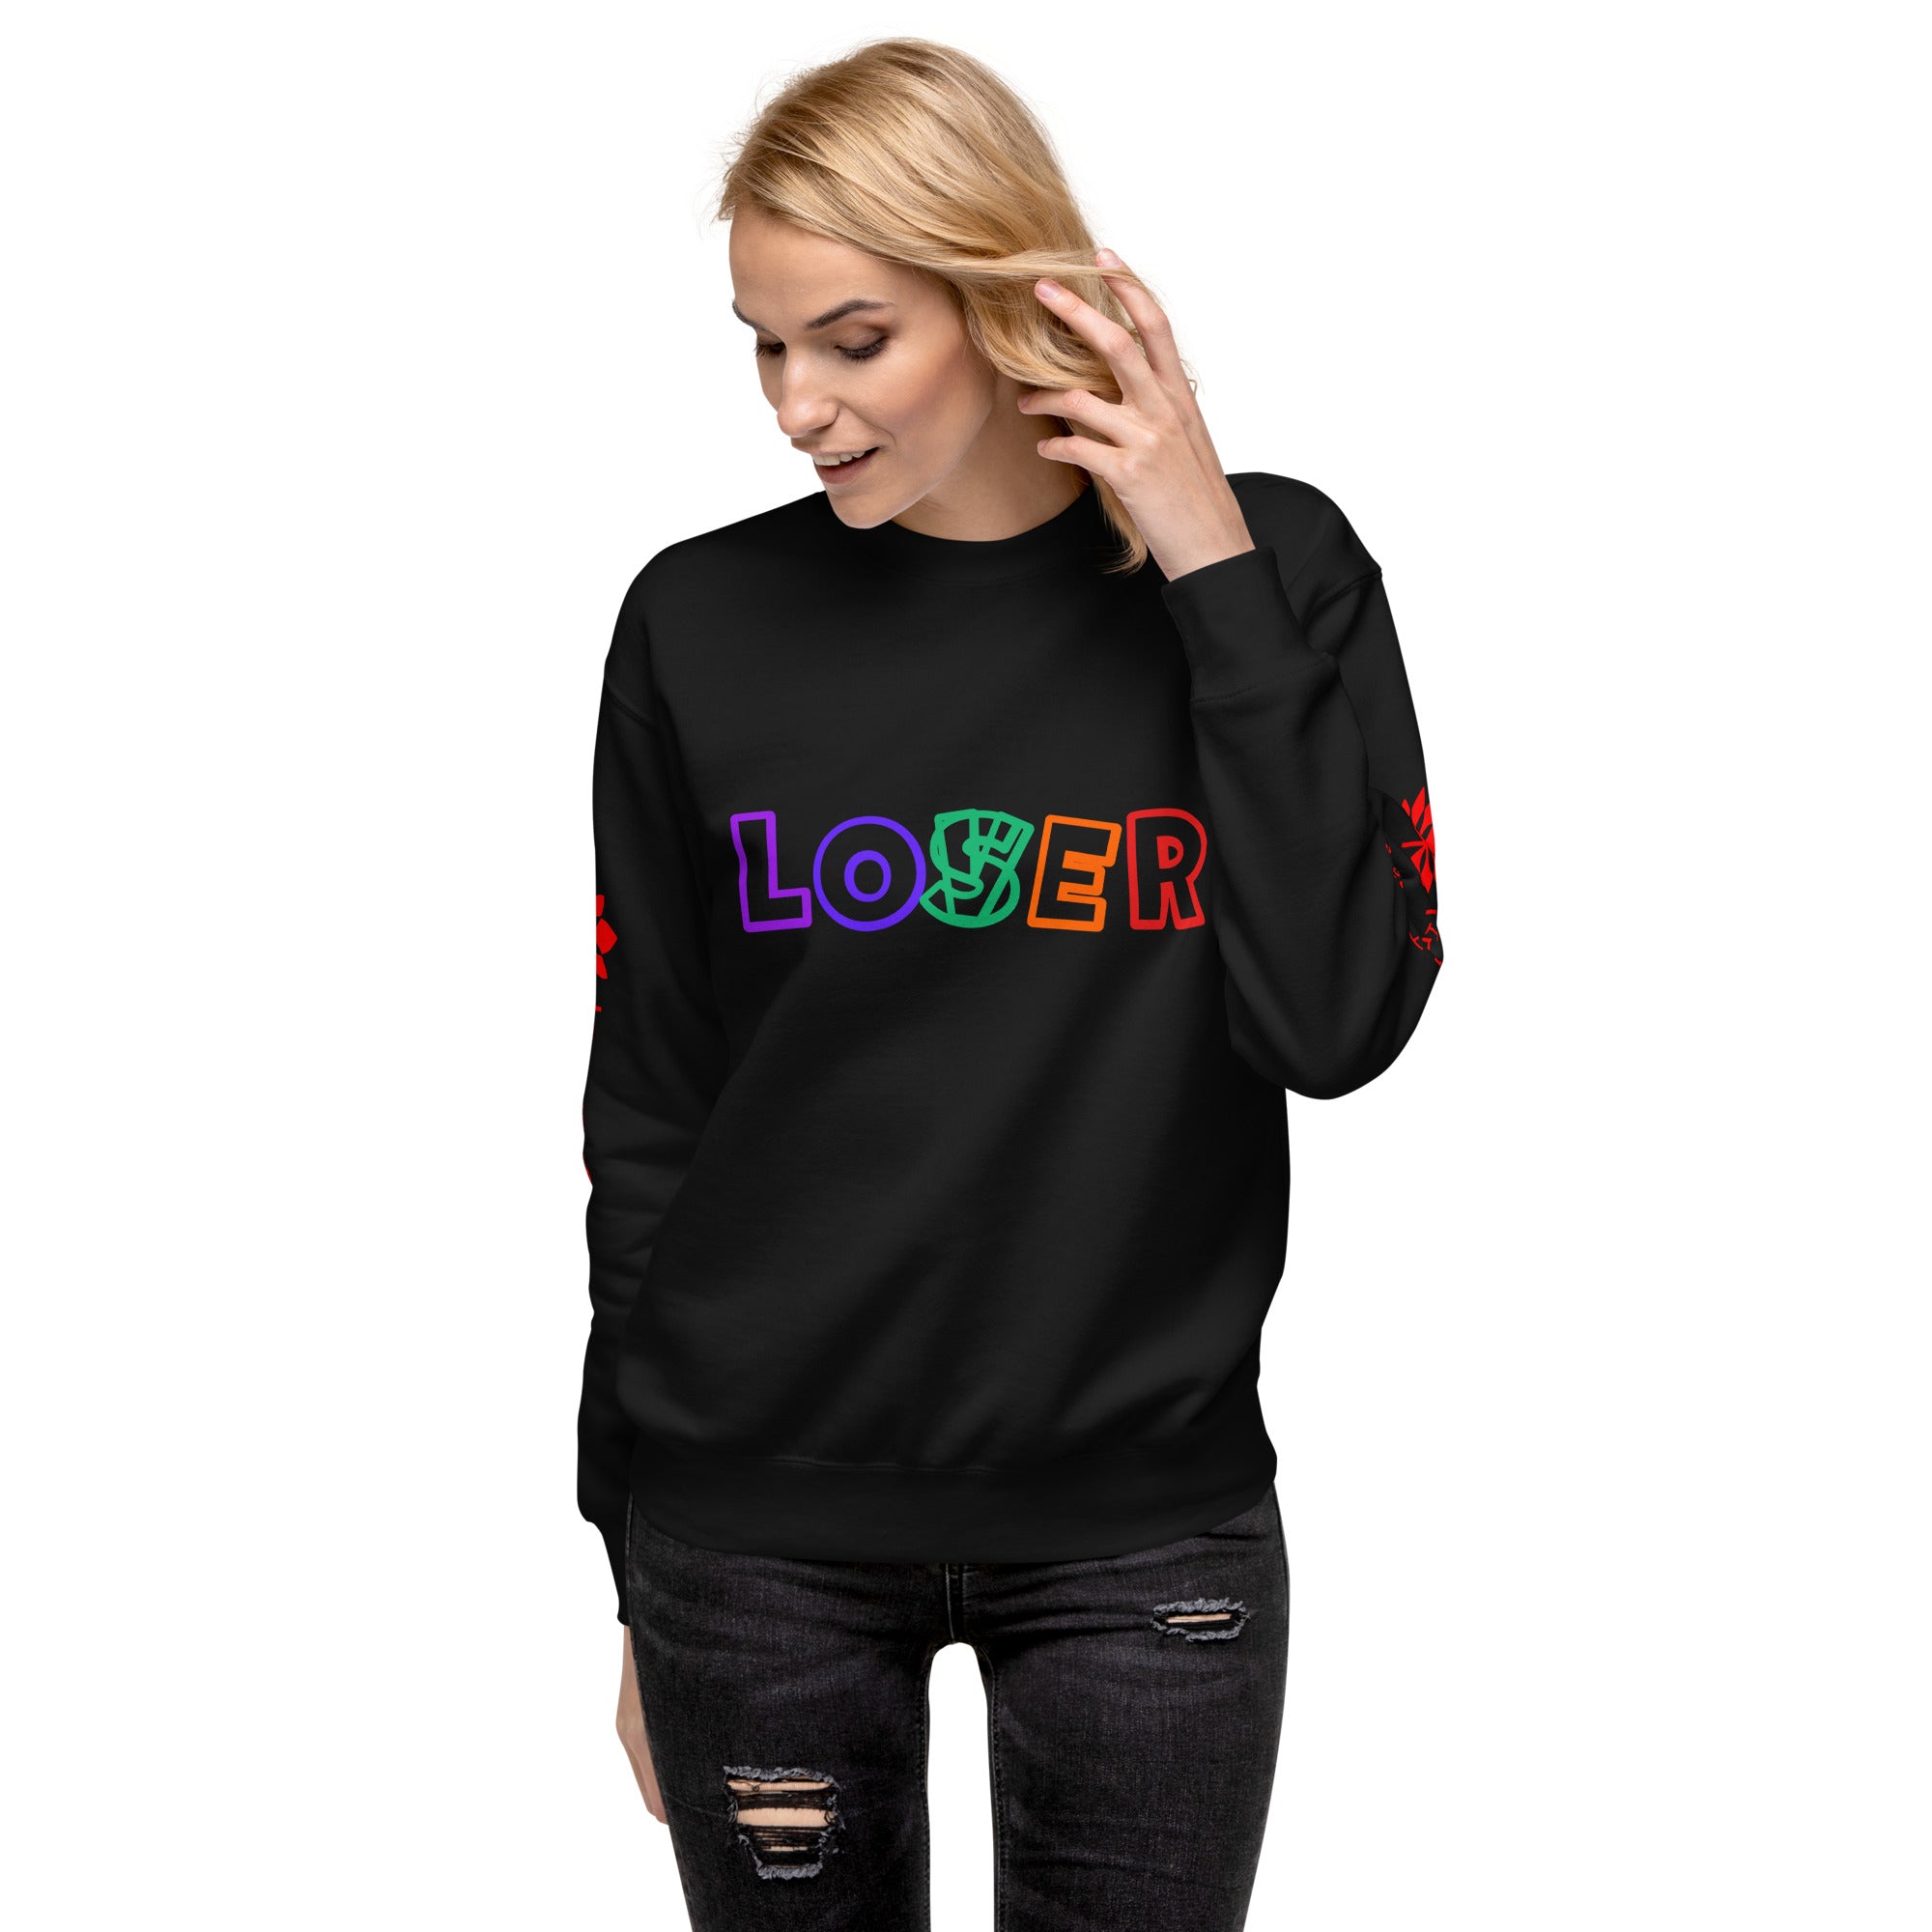 sweatshirt with the words LOV(S)ER printed